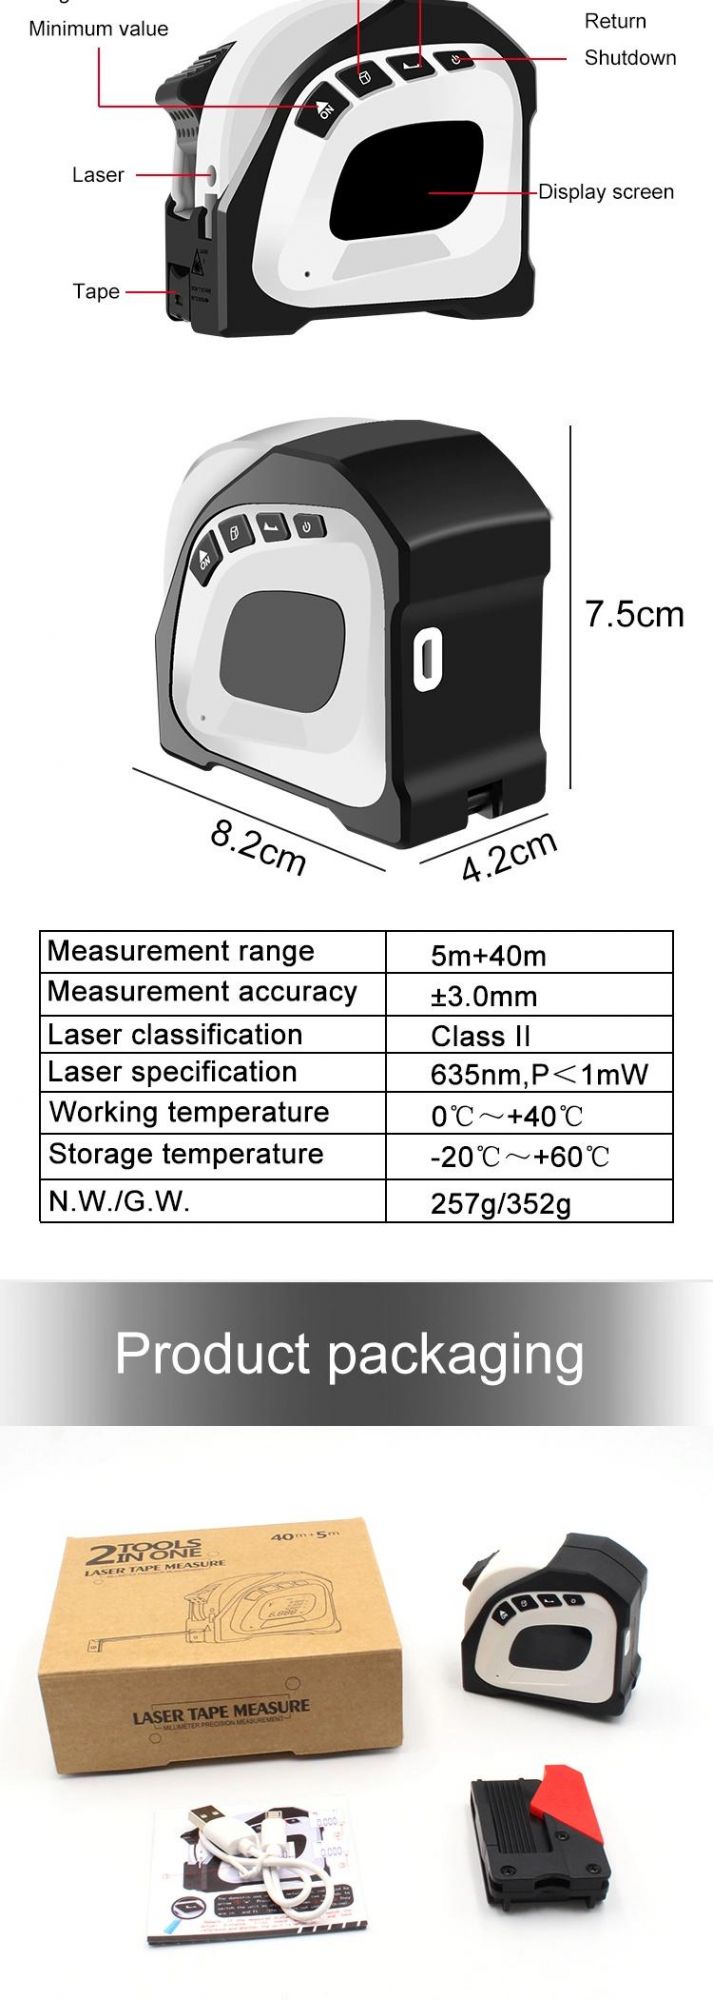 Laser Tape Measure Infrared Tape Measuring Tools Price